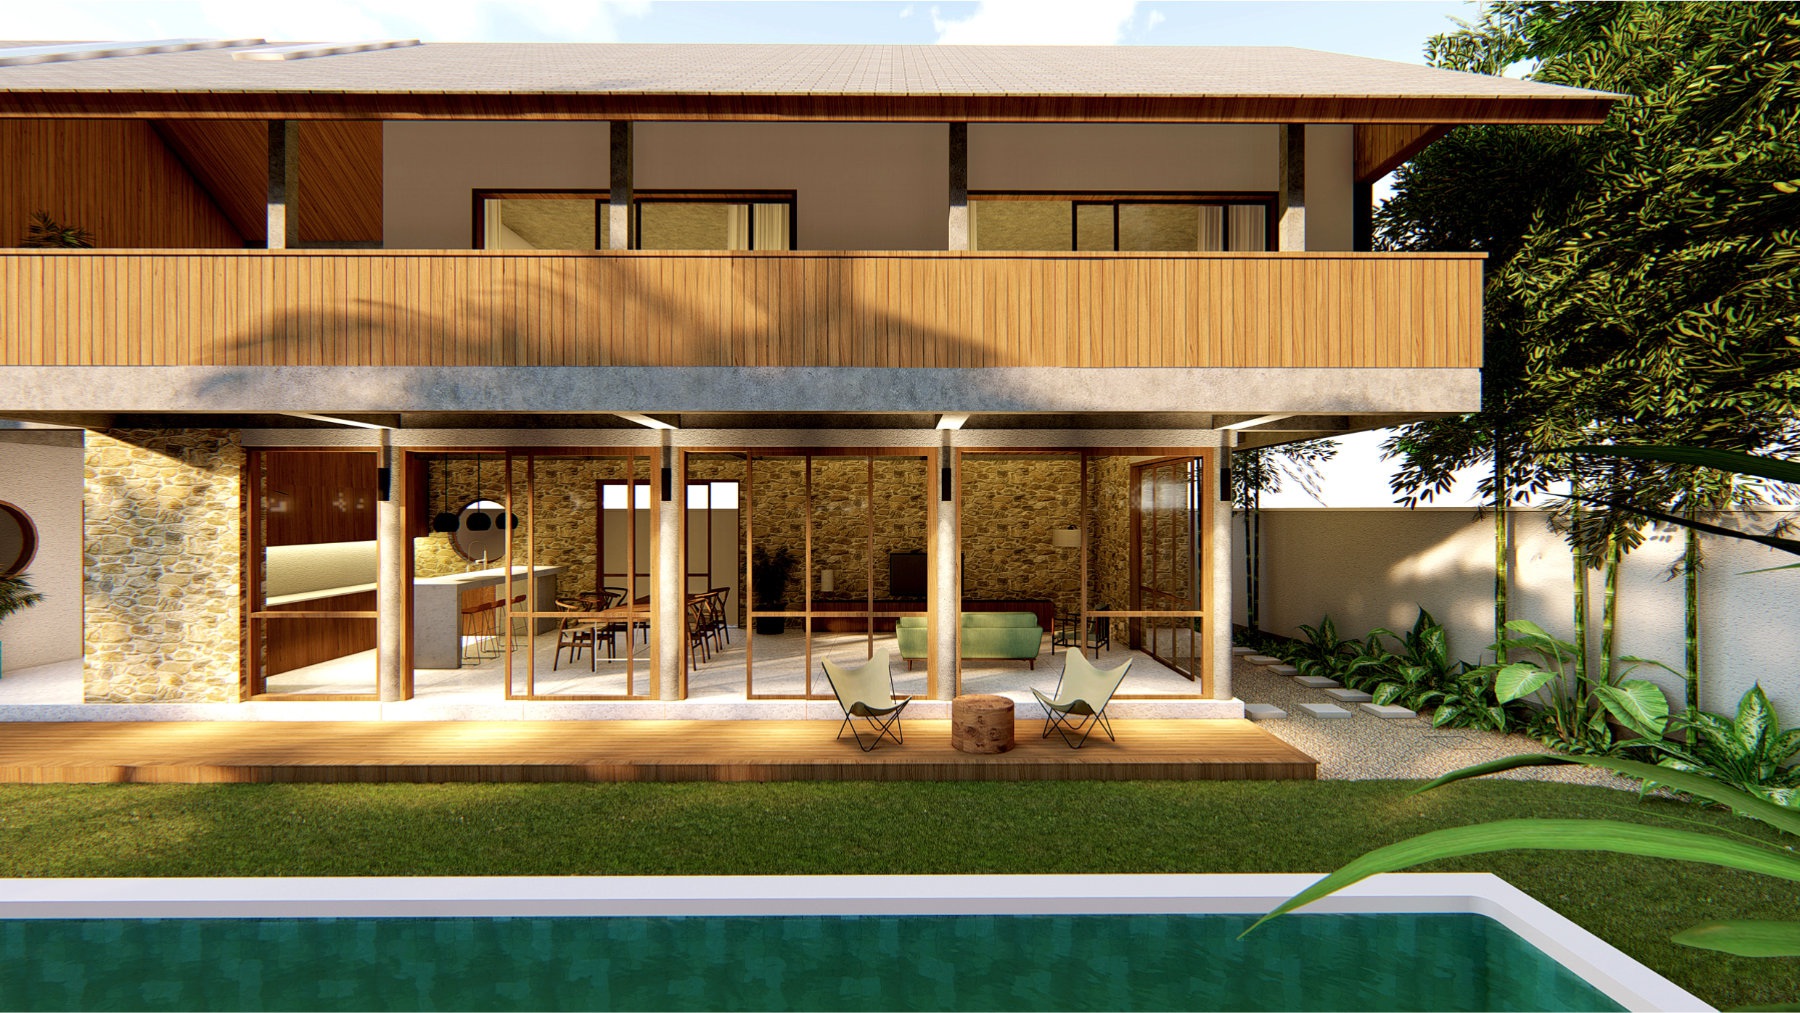 Design Assembly - Cepaka Villa - Bali Architect - Interior Design - Bali Villa - Wooden Facade